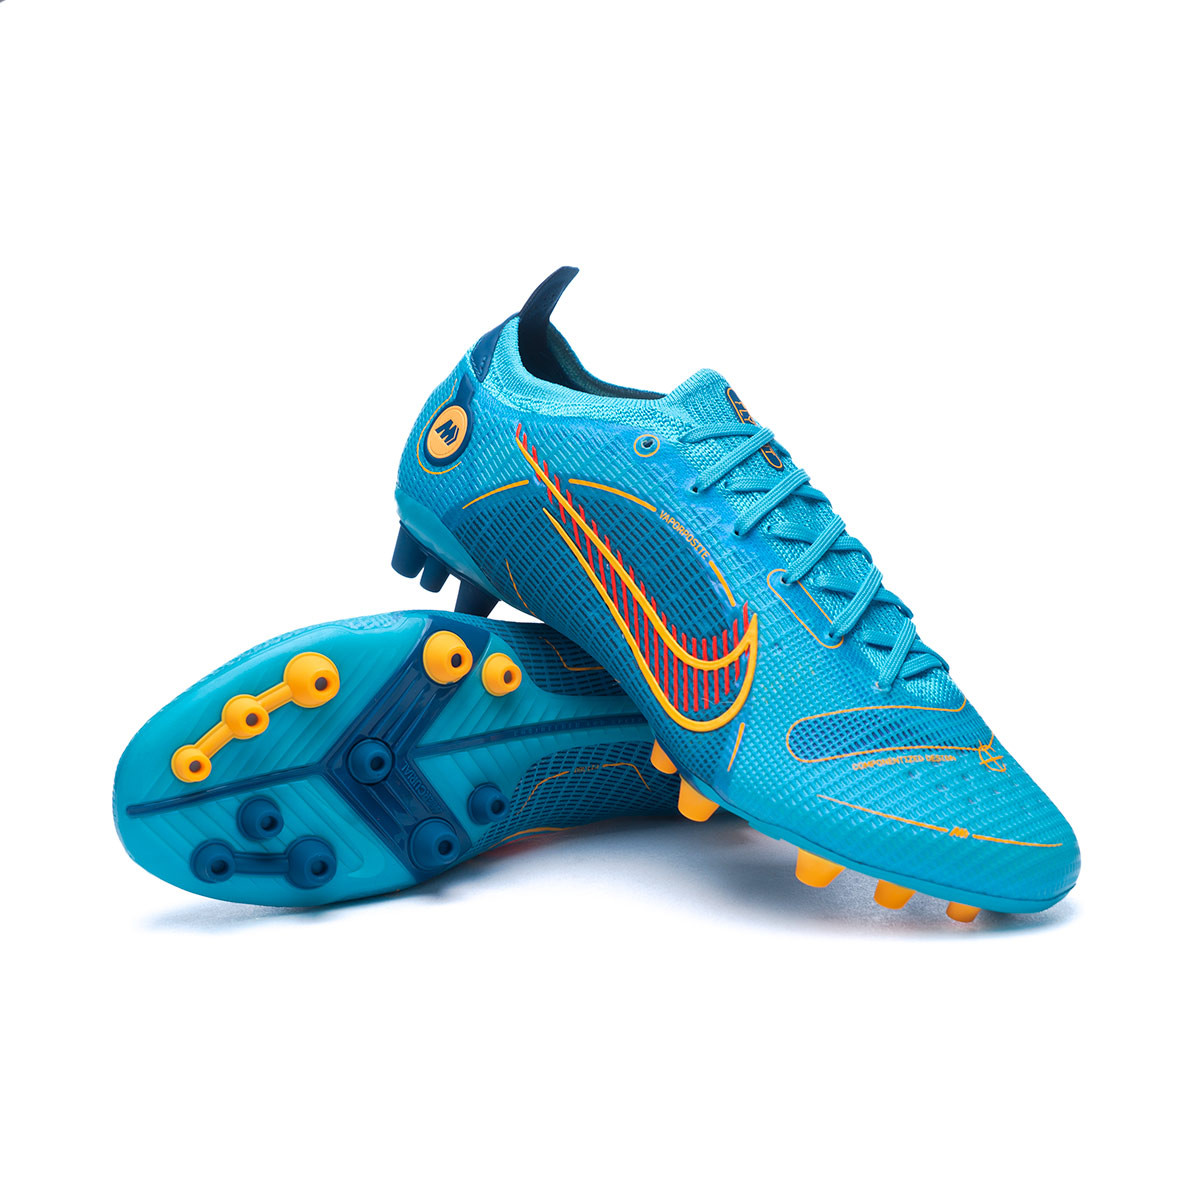 Bota de fútbol Nike Vapor 14 Elite Chlorine Blue-Laser Orange-Marina - Emotion